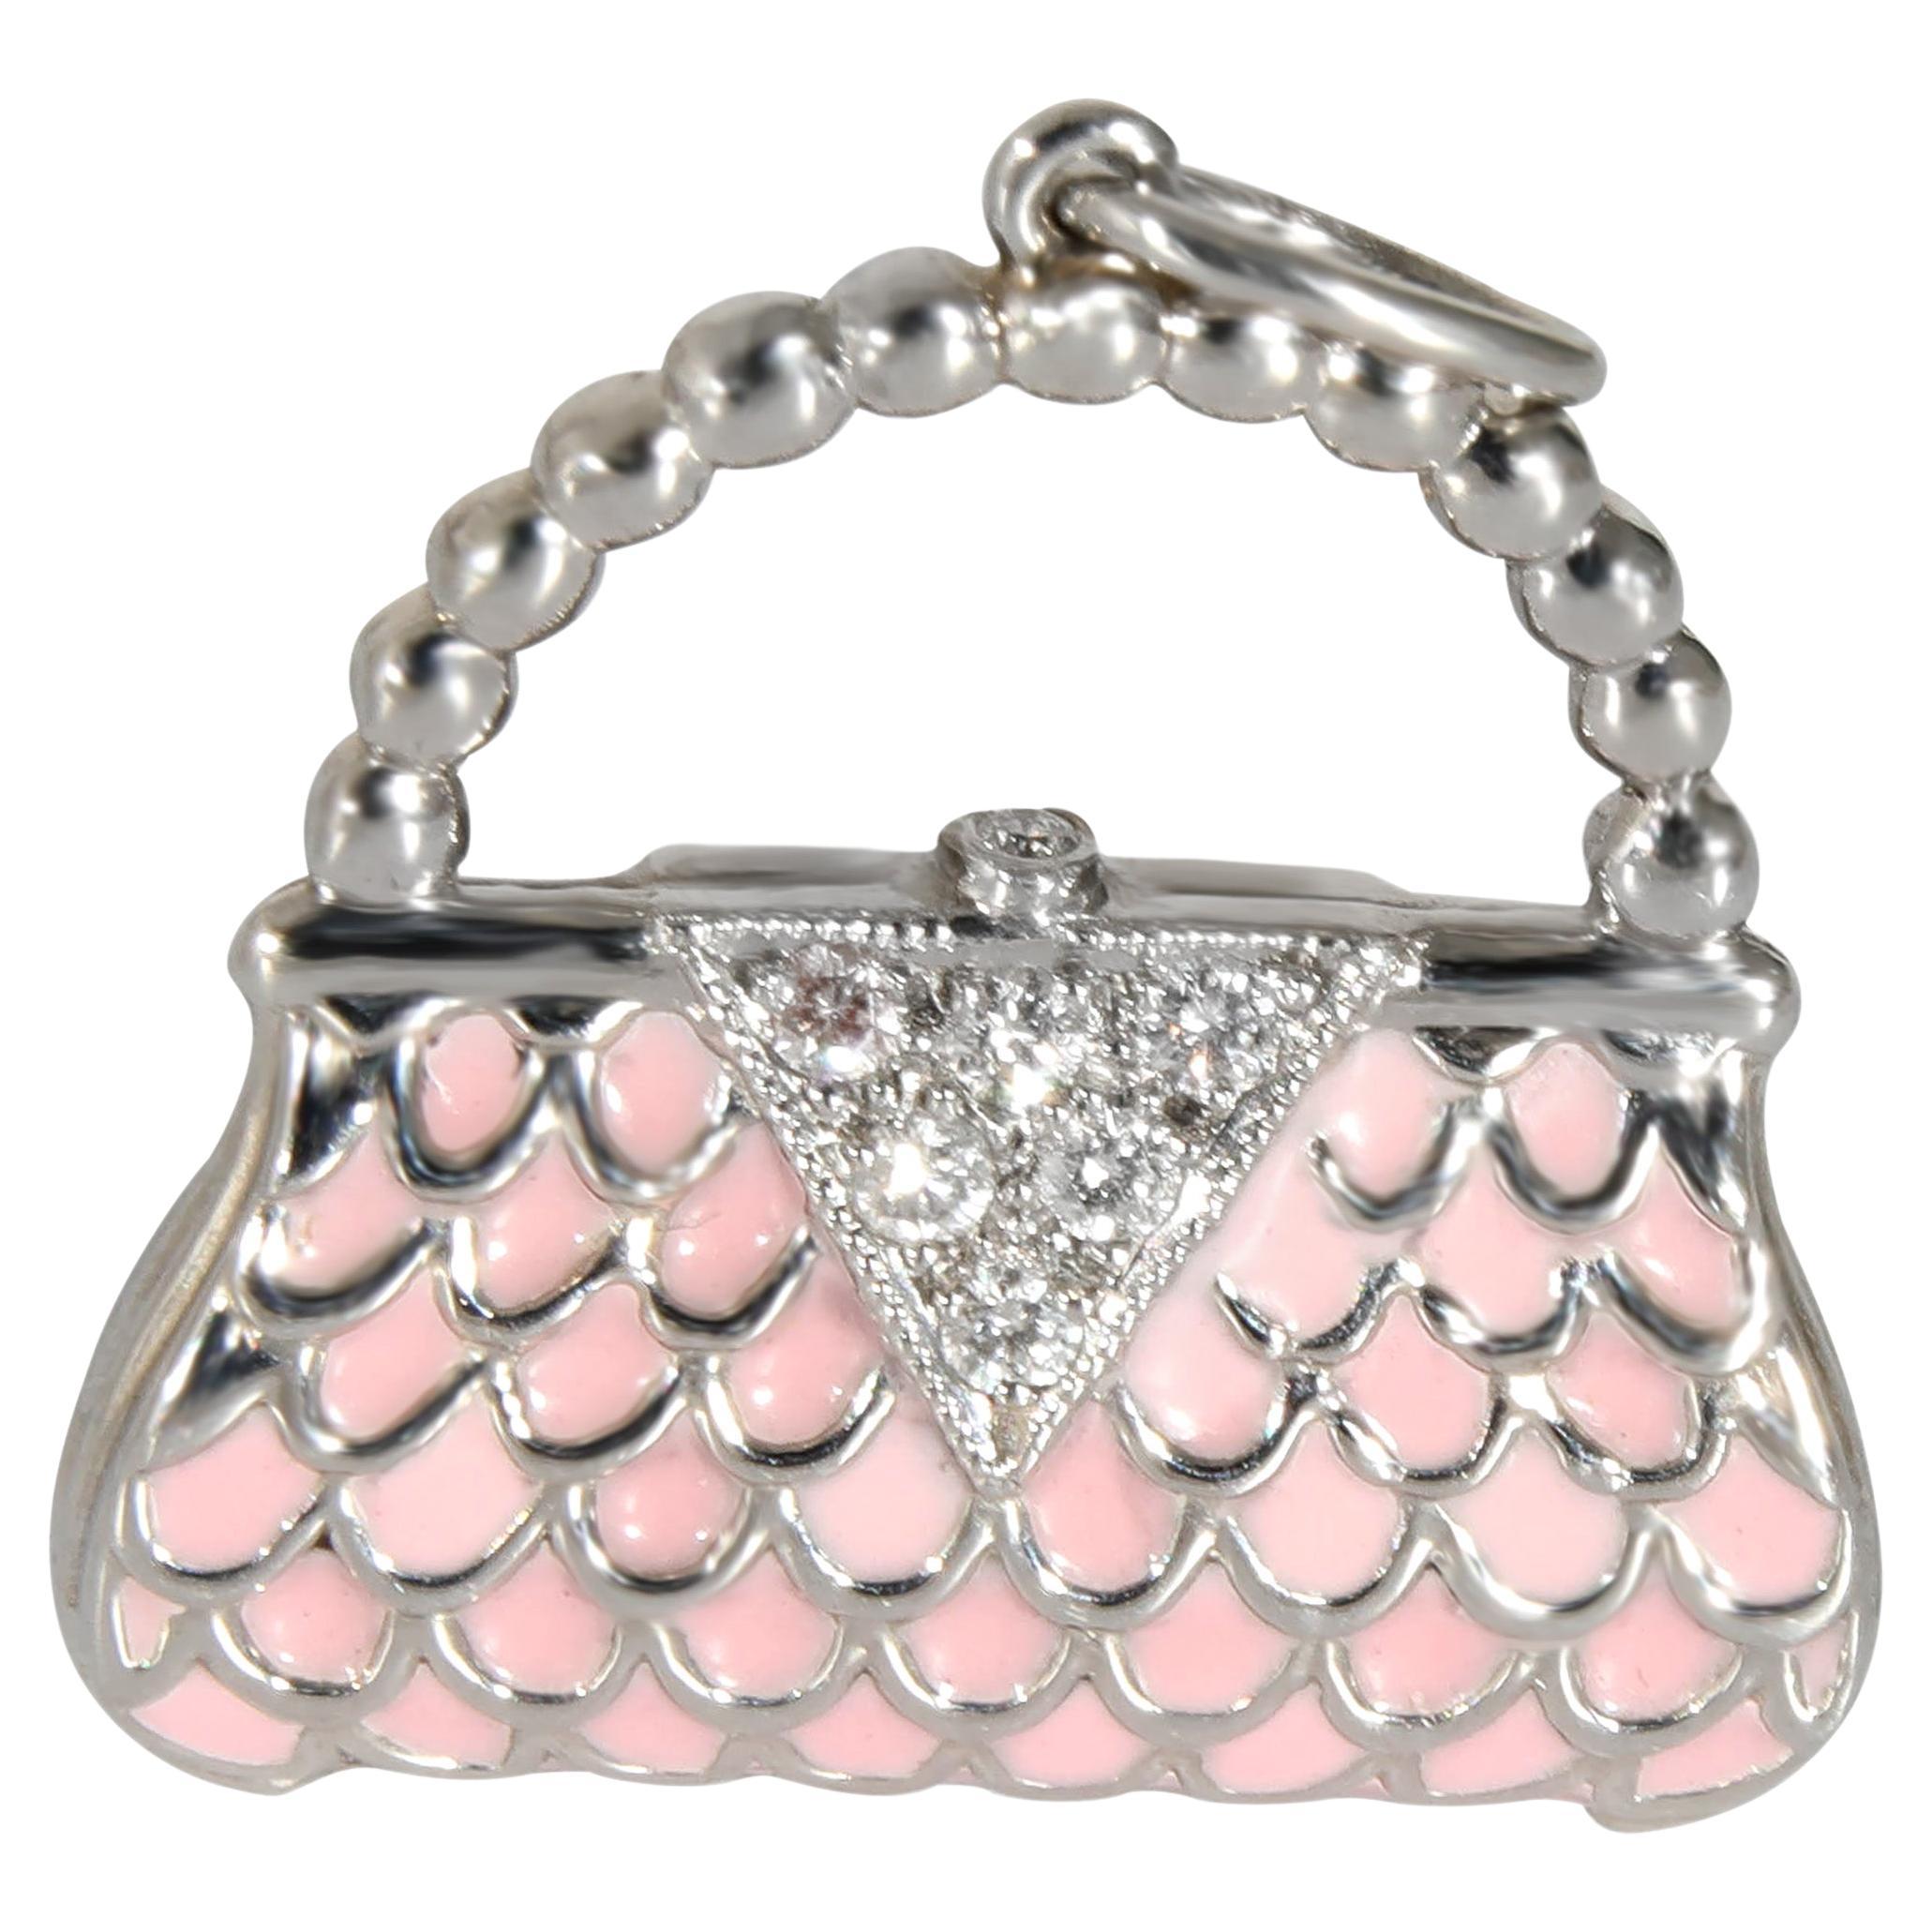 Tiffany & Co. Diamond & Enamel Handbag Charm in Platinum 0.04 CTW For Sale